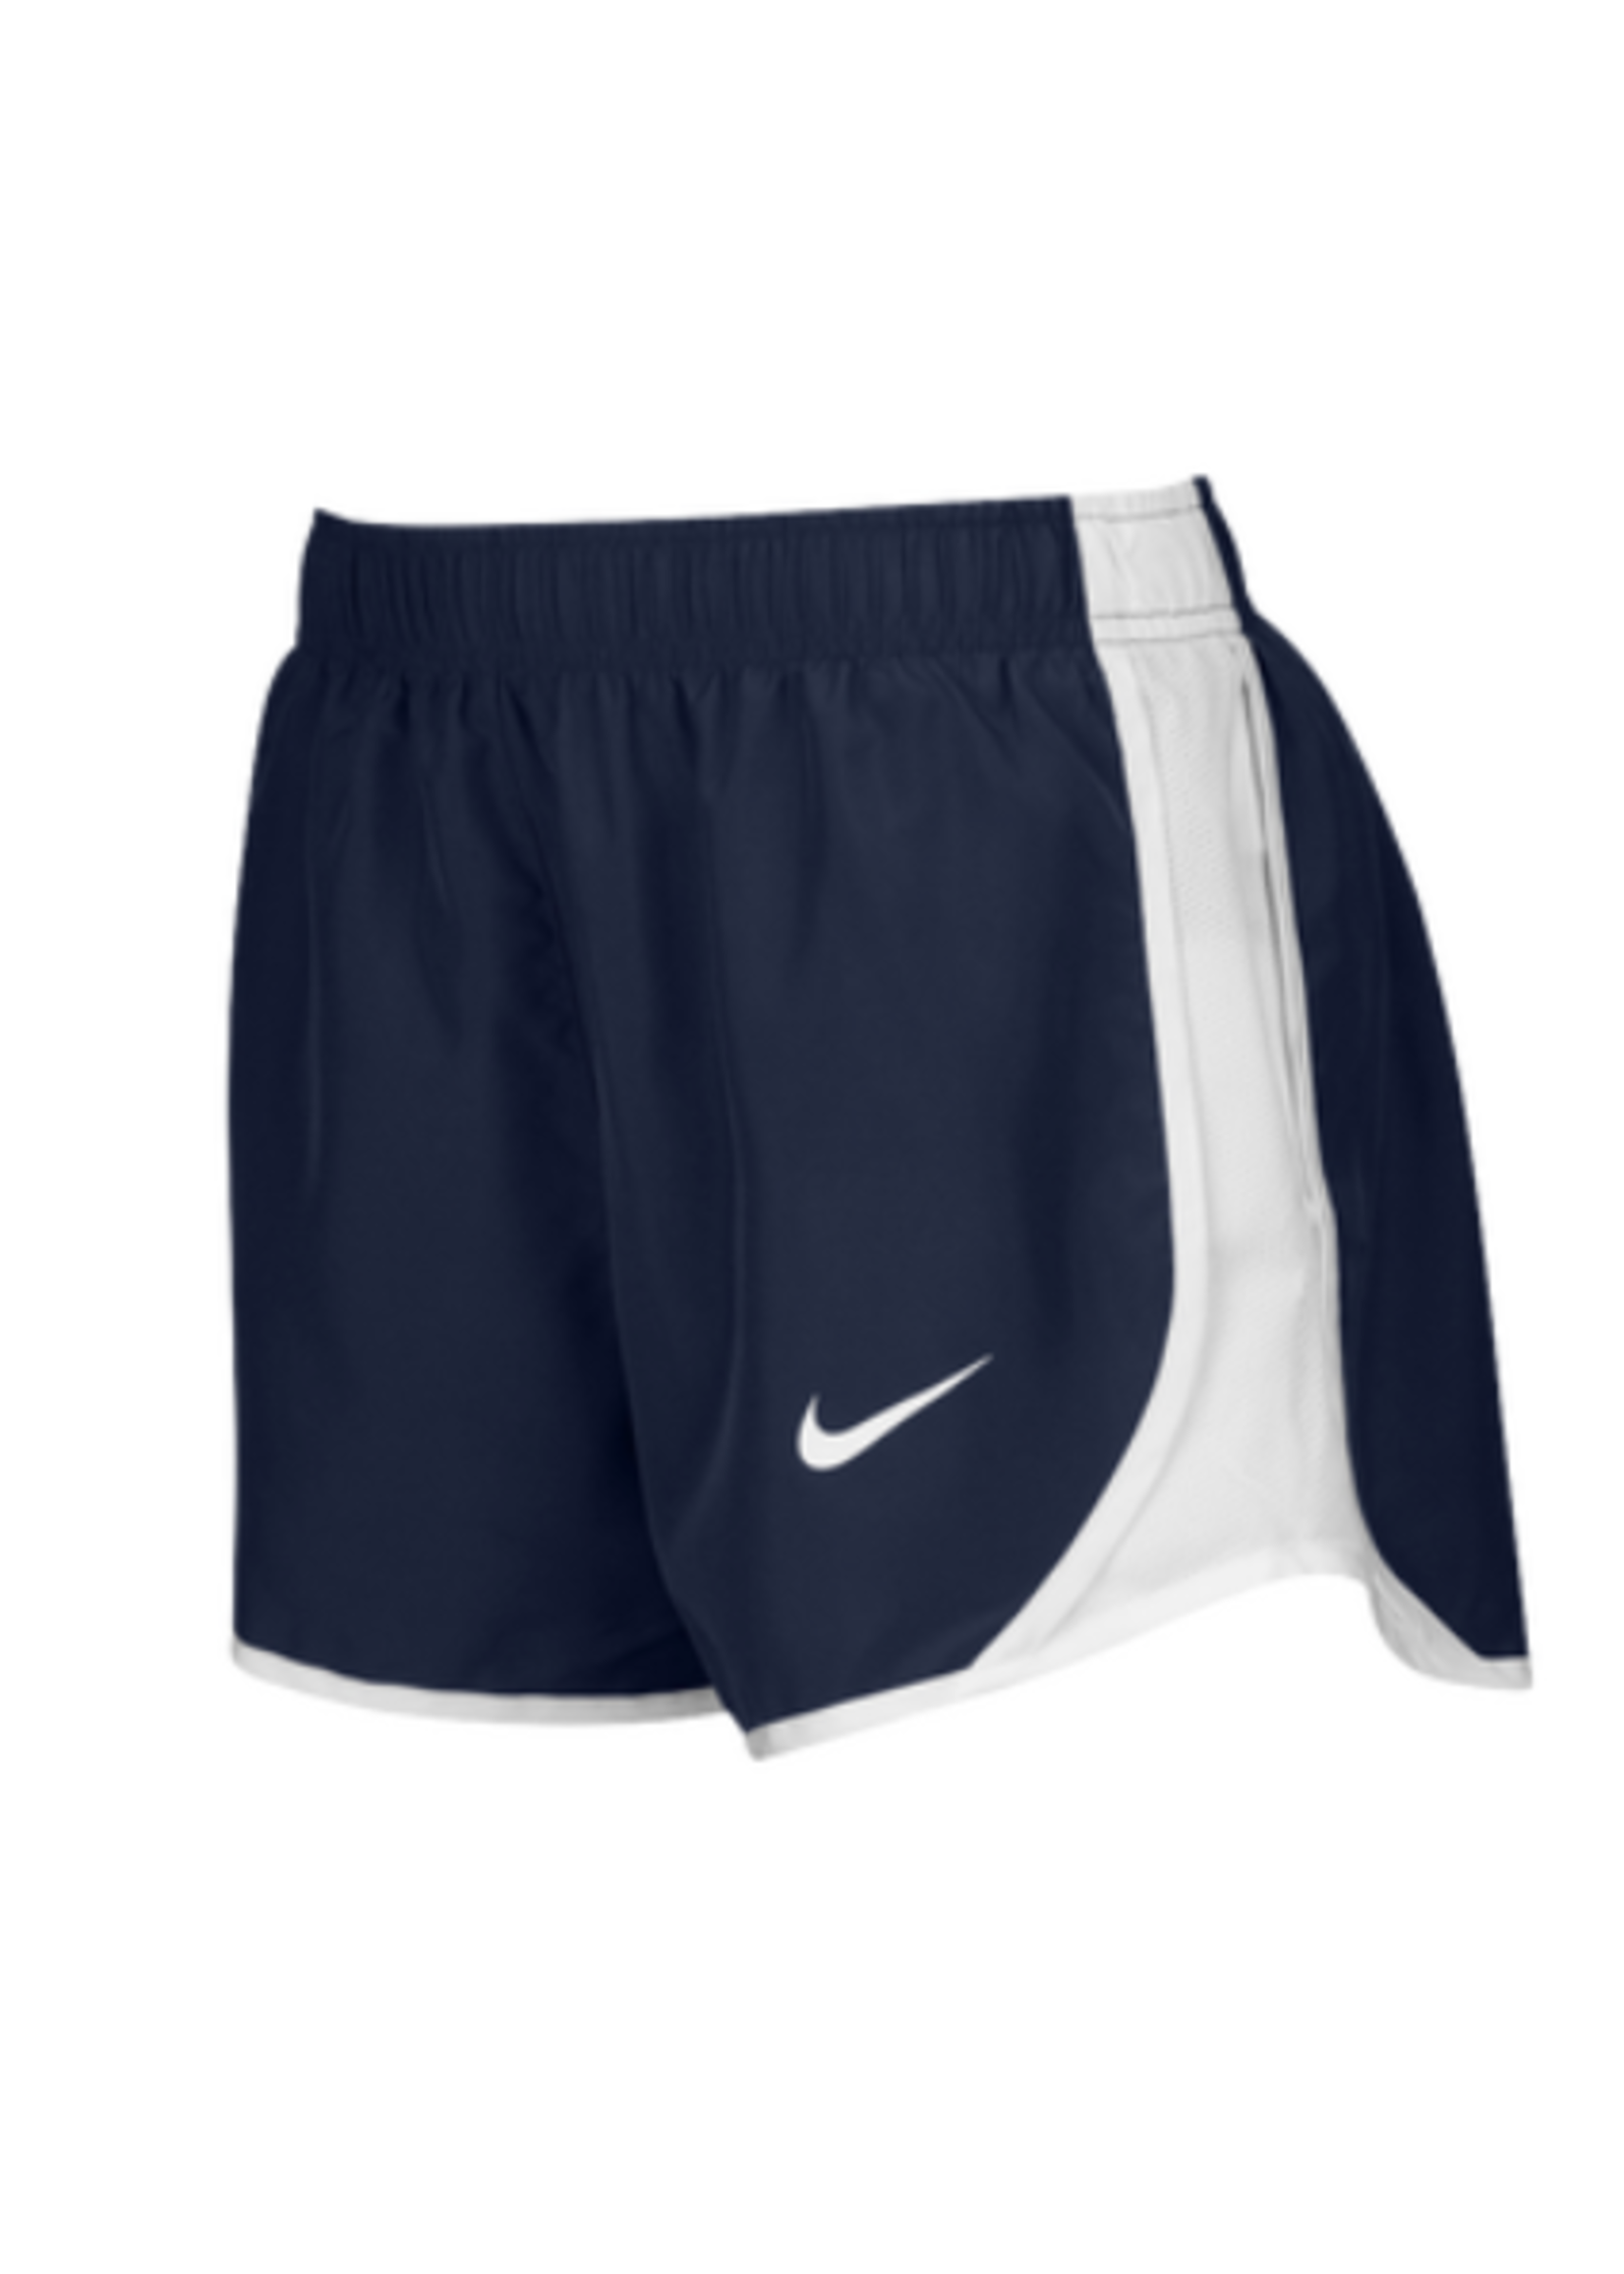 NON-UNIFORM Nike Team Dry Tempo Shorts - Women's